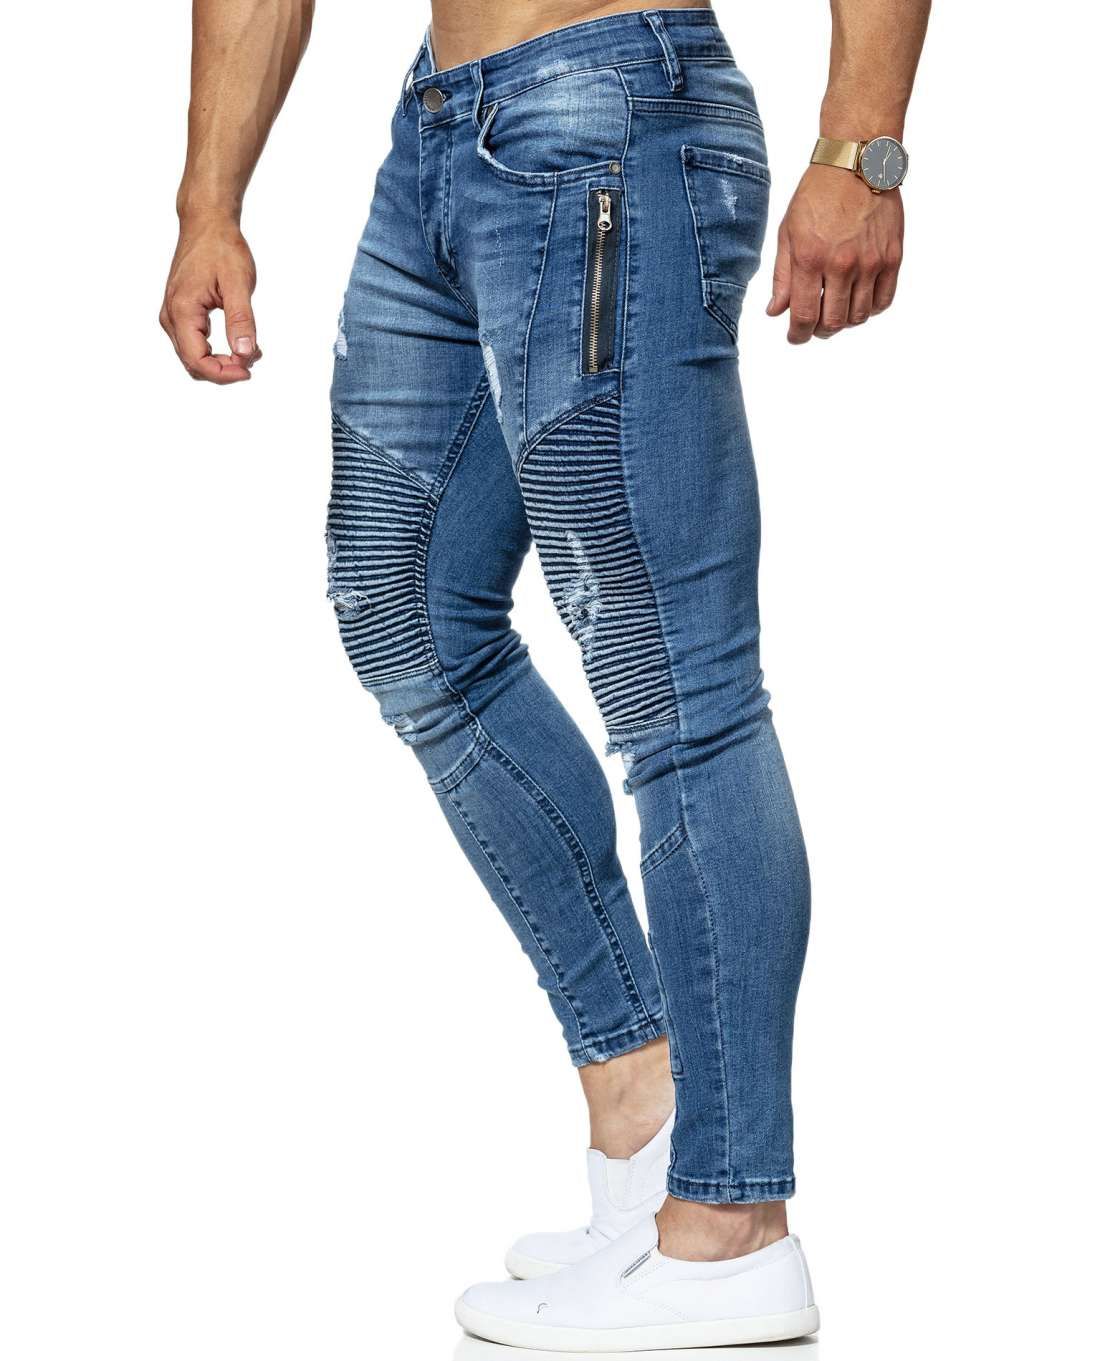 Gafitter Jeans Blue L32 Jerone